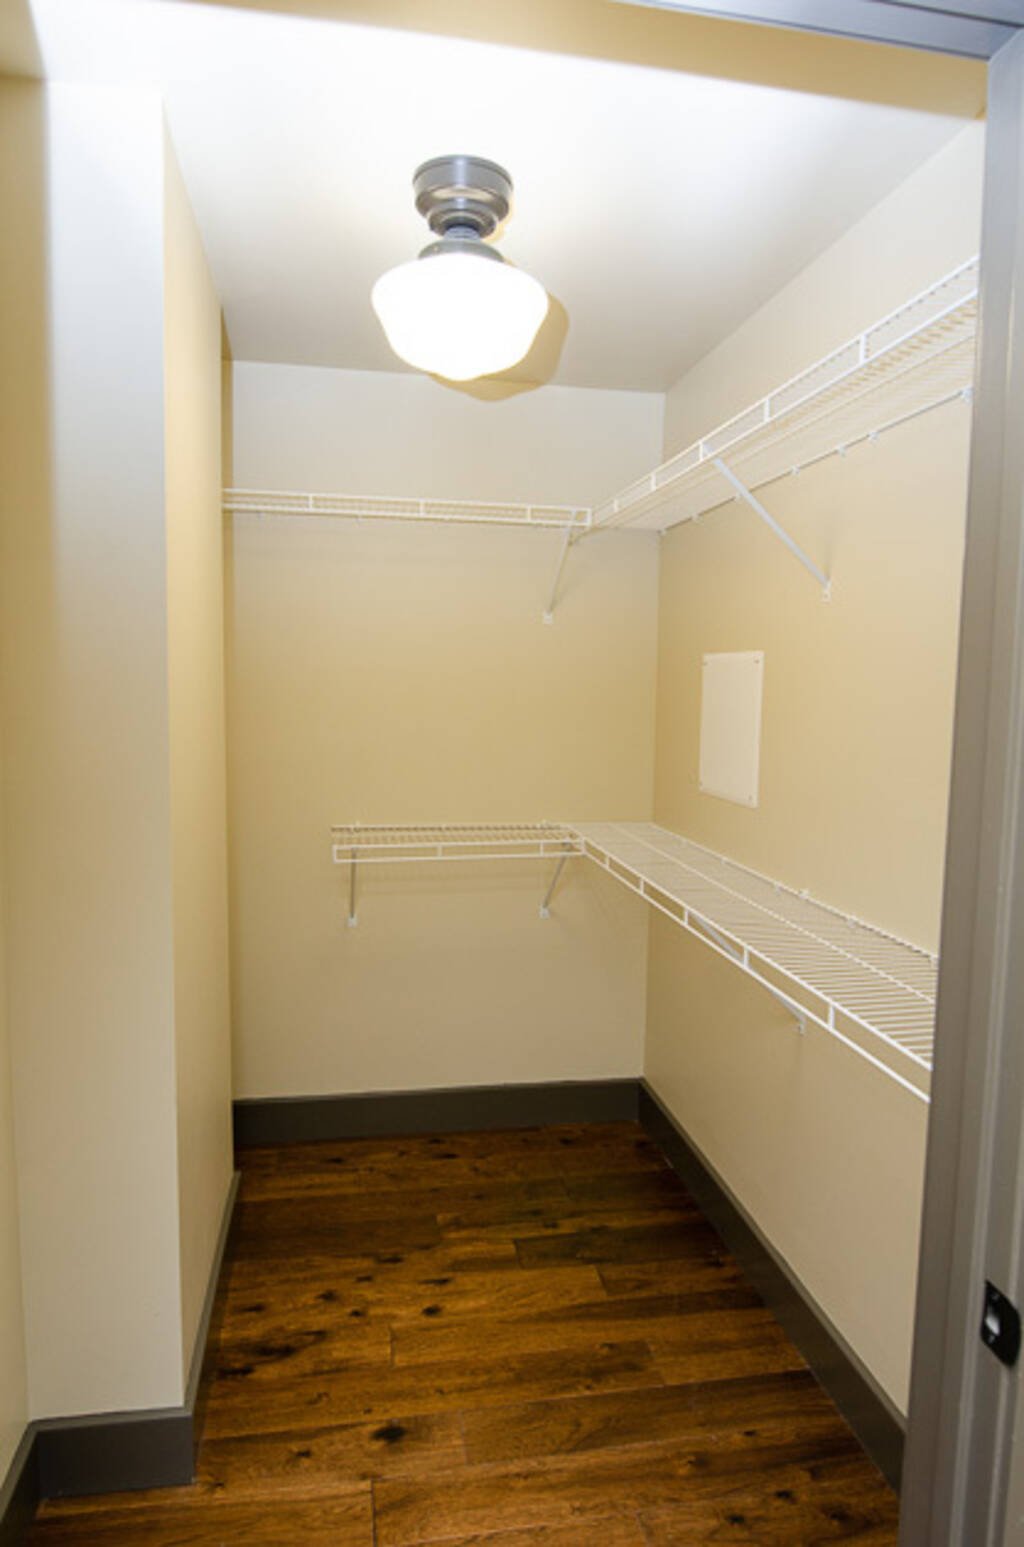 LOFT 2E WALK-IN CLOSET WITH WHITE SHELVES 